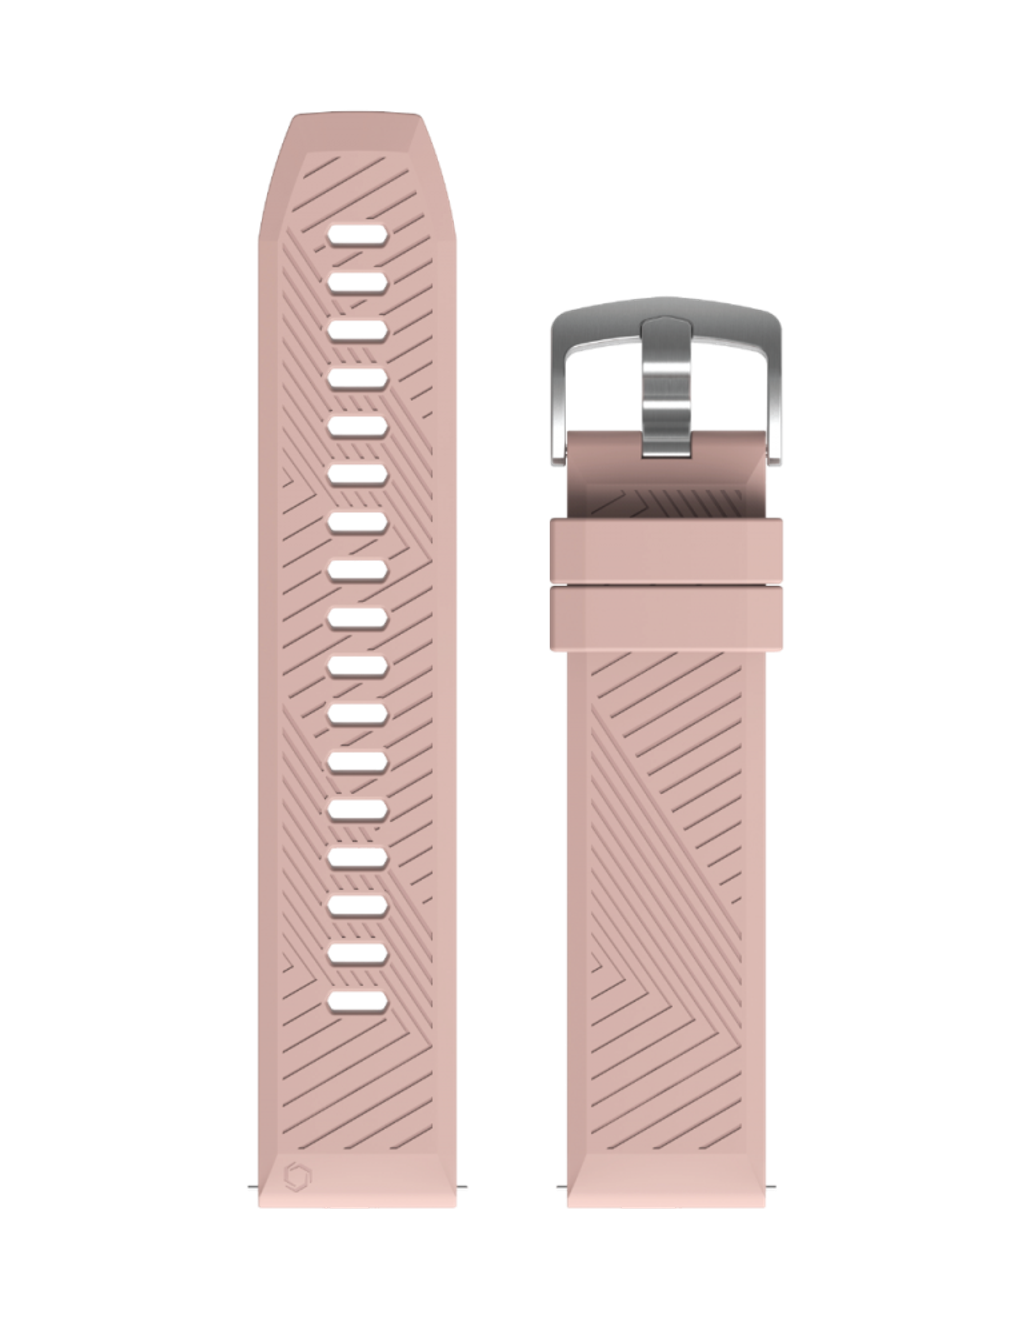 strap-no-shawdow-25-768x994.png